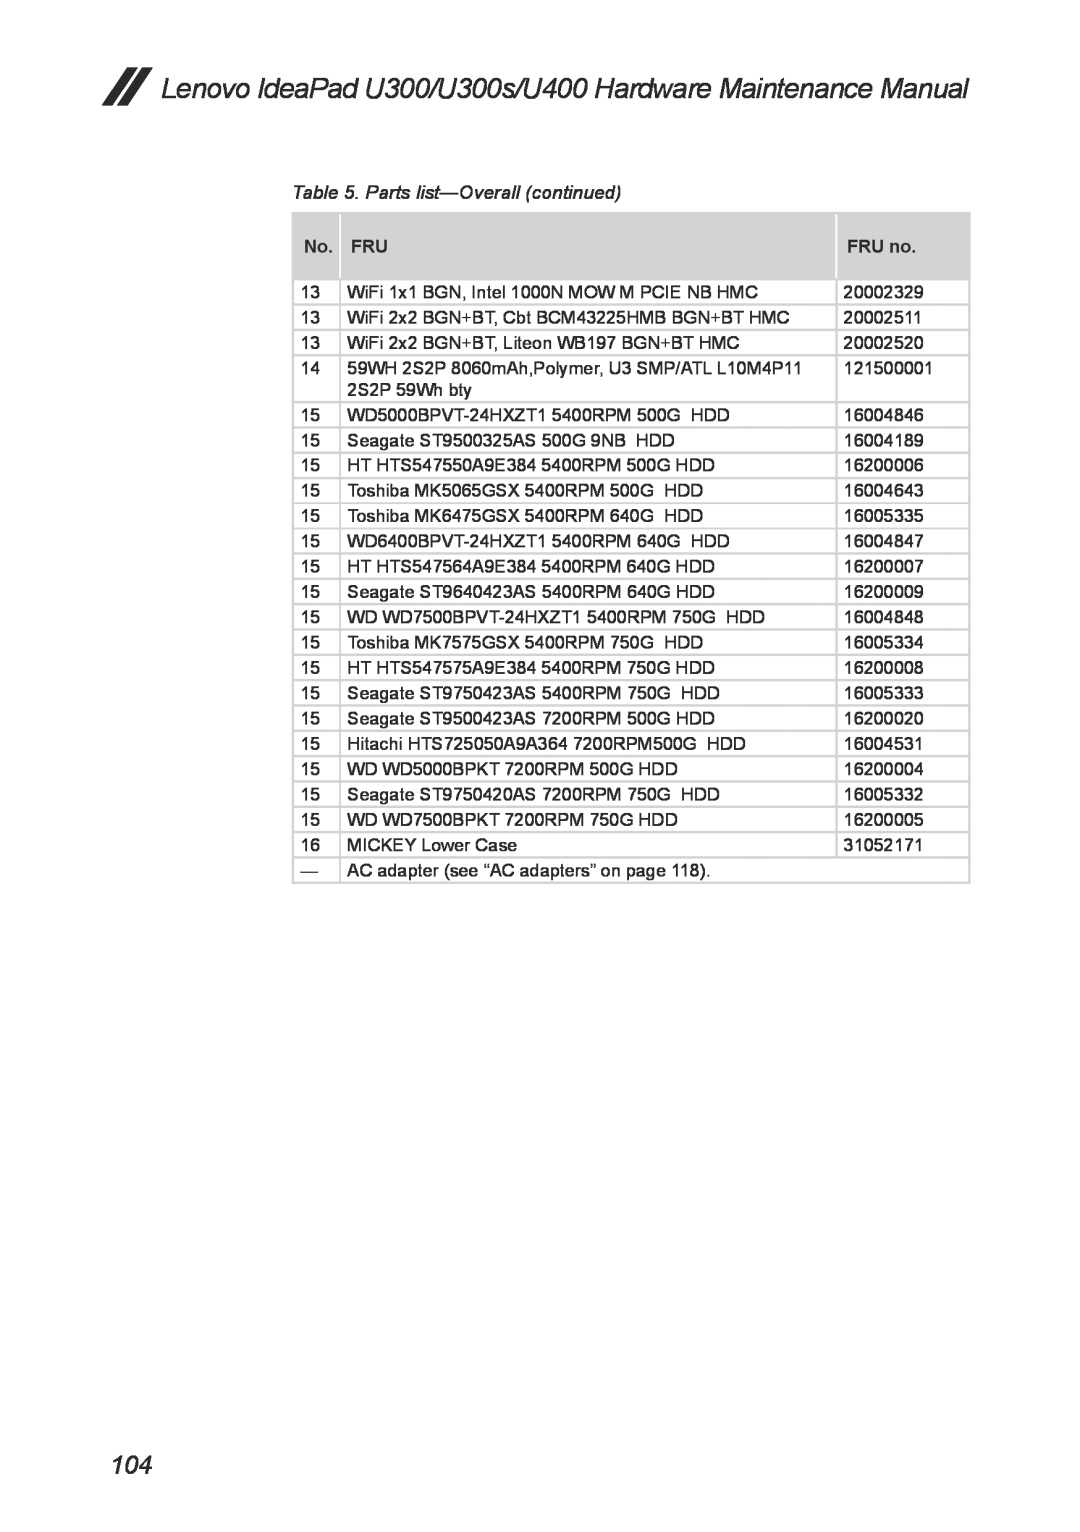 Lenovo U300S Parts list-Overall continued, Lenovo IdeaPad U300/U300s/U400 Hardware Maintenance Manual, No. FRU, FRU no 